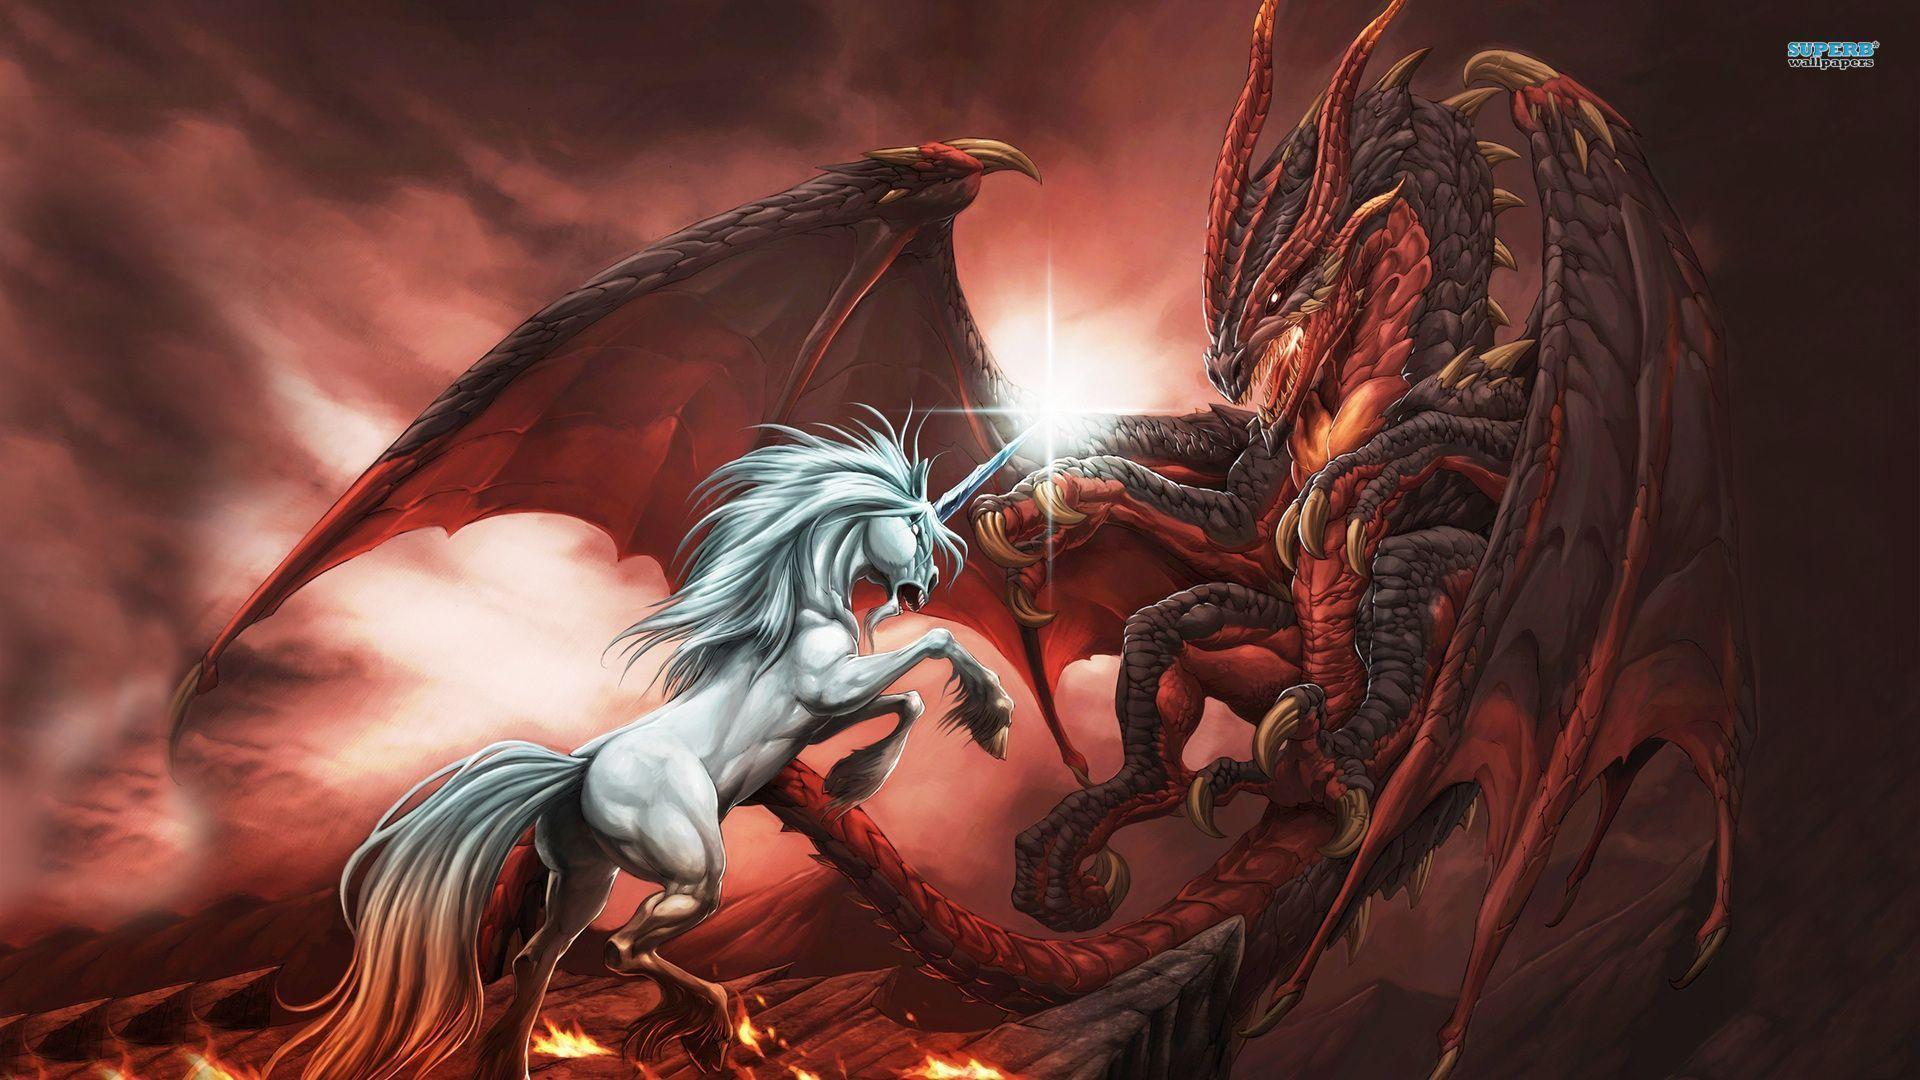 Unicorn vs Dragon wallpaper wallpaper - #